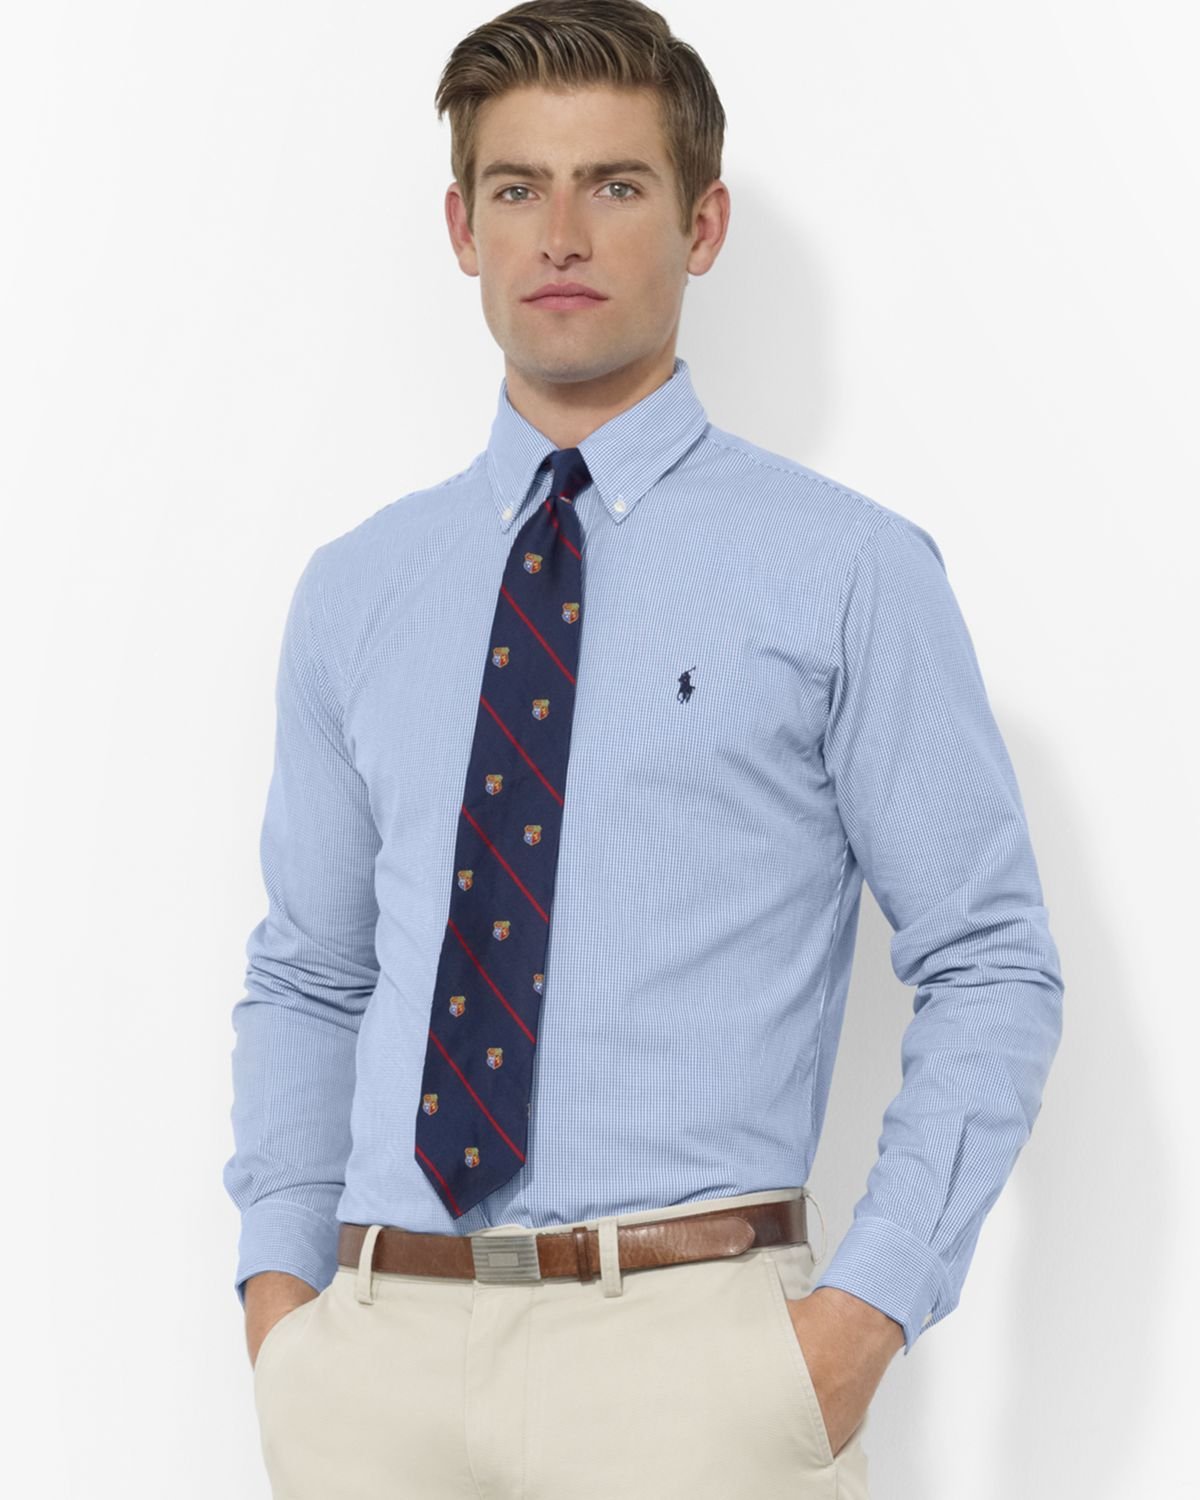 Polo Ralph Lauren Blue Oxford Shirt Clearance, SAVE 34% - aveclumiere.com